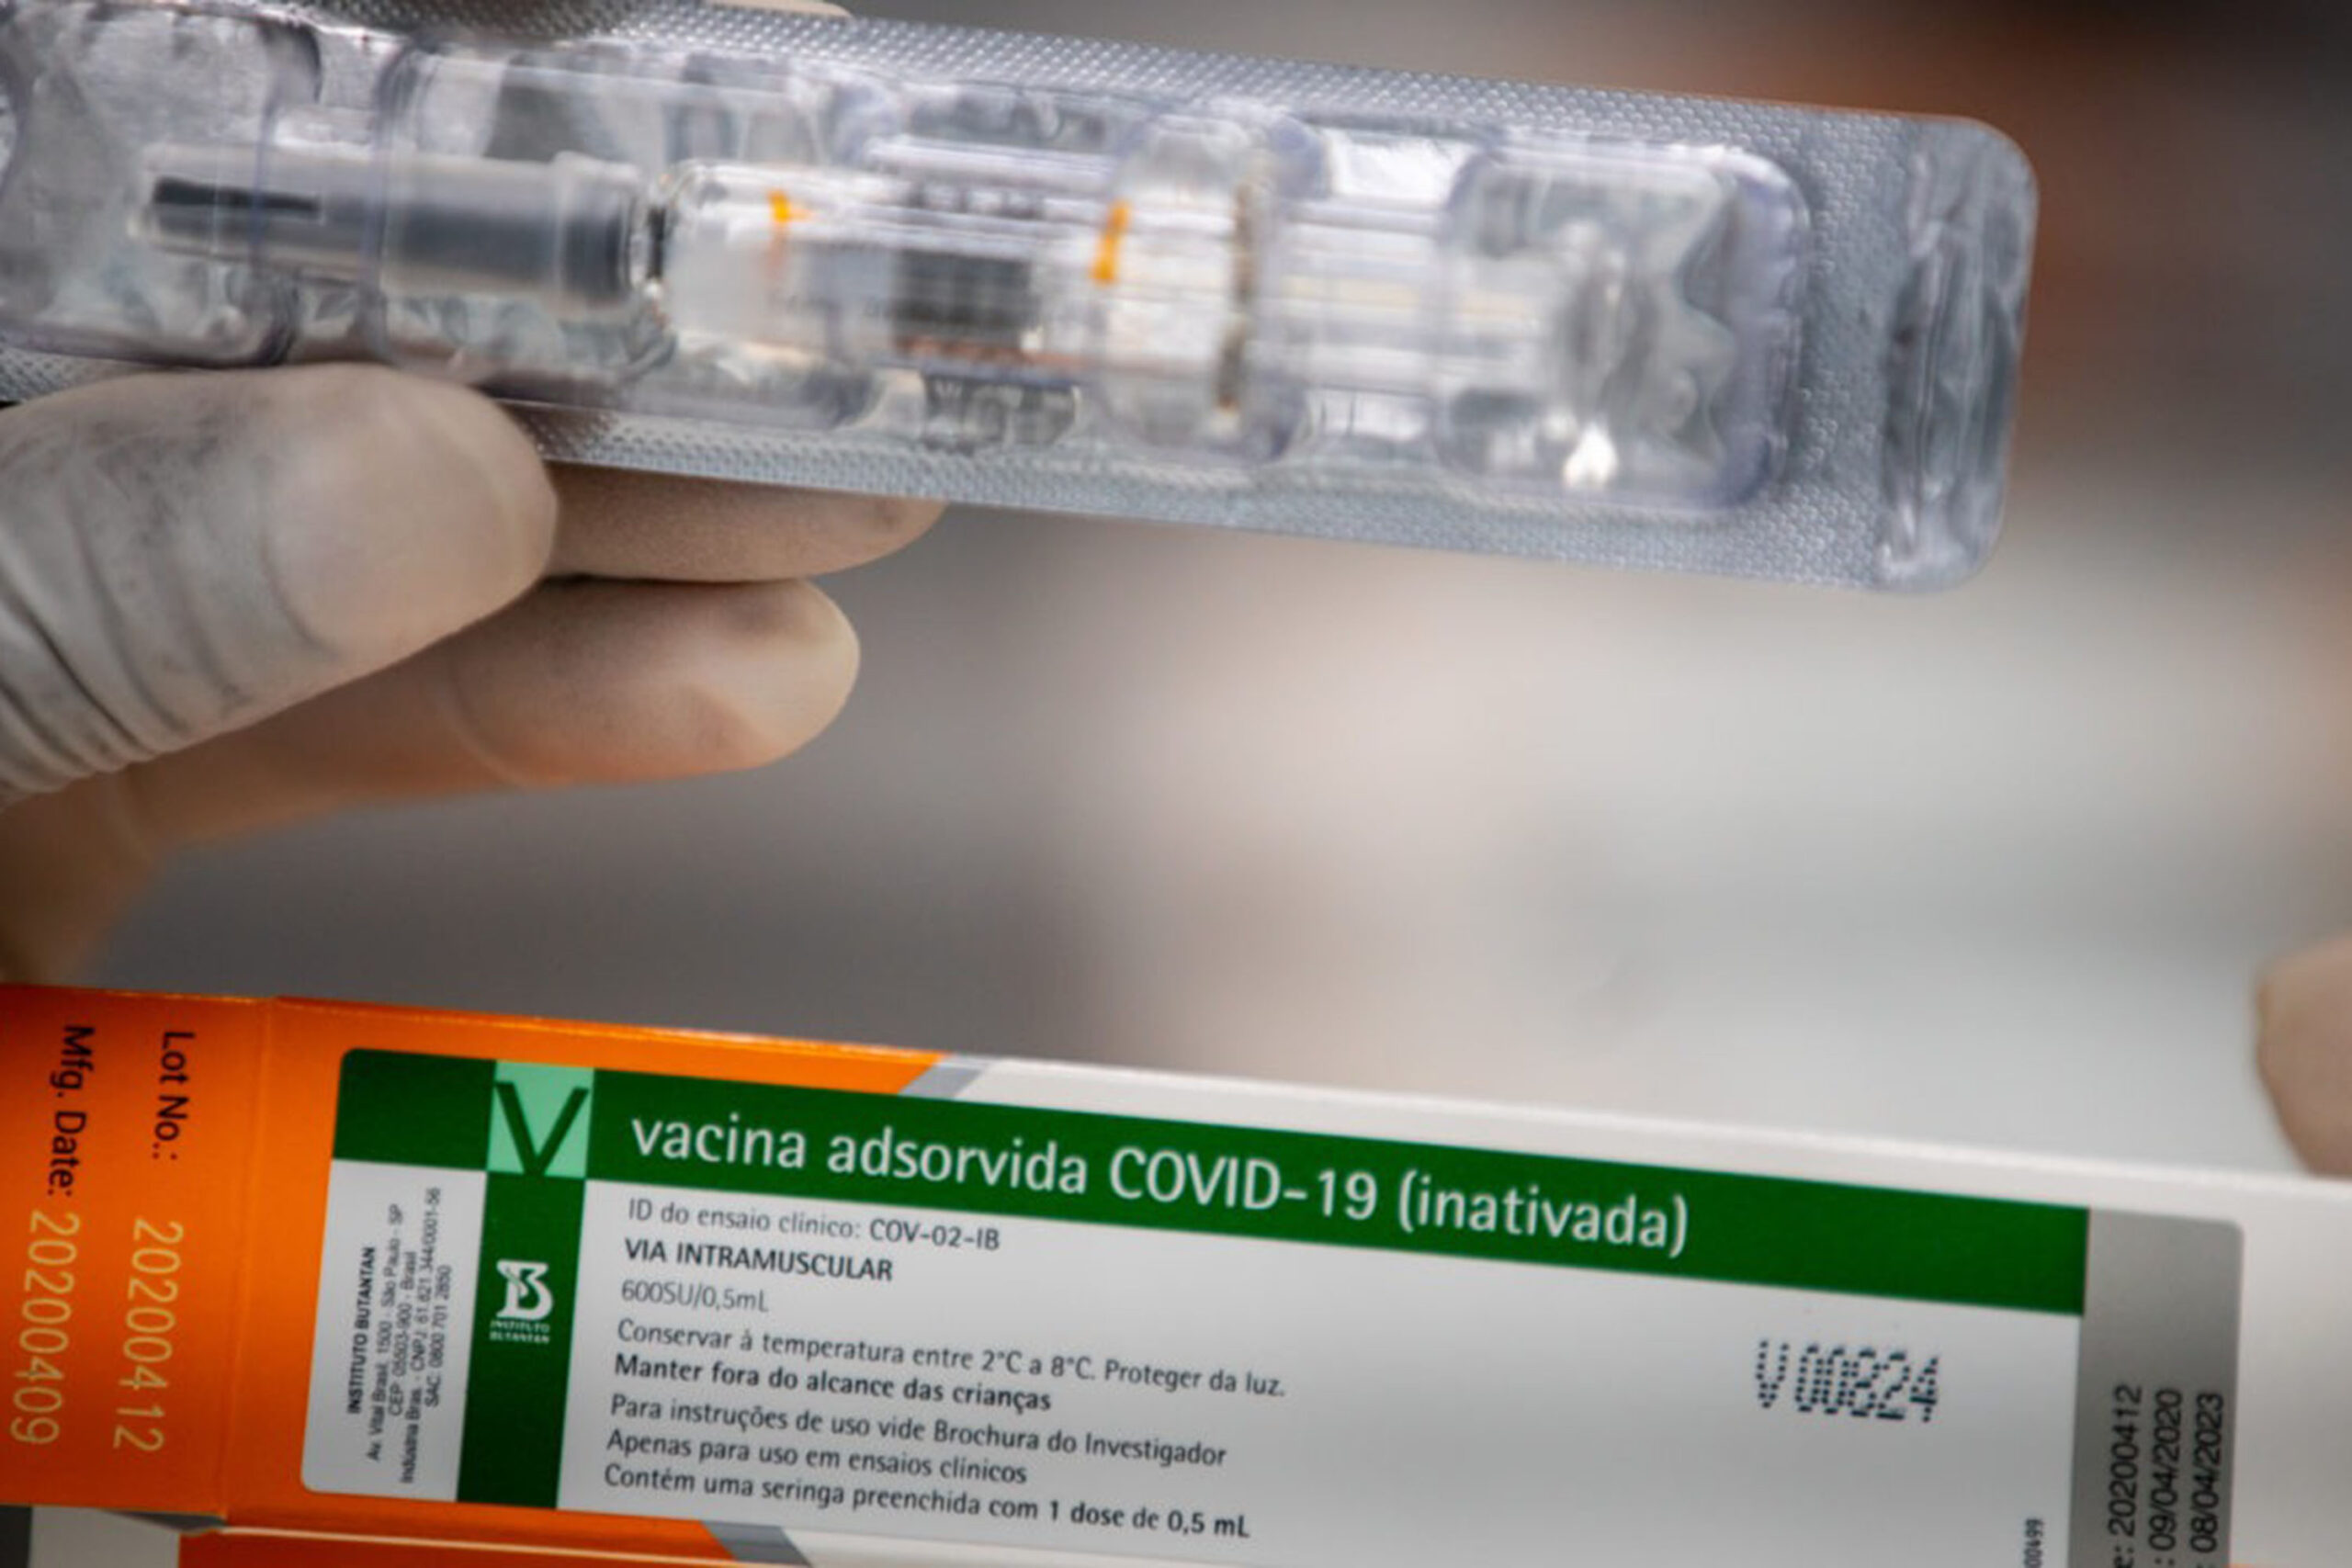  vacina falsificada para combater coronavírus 